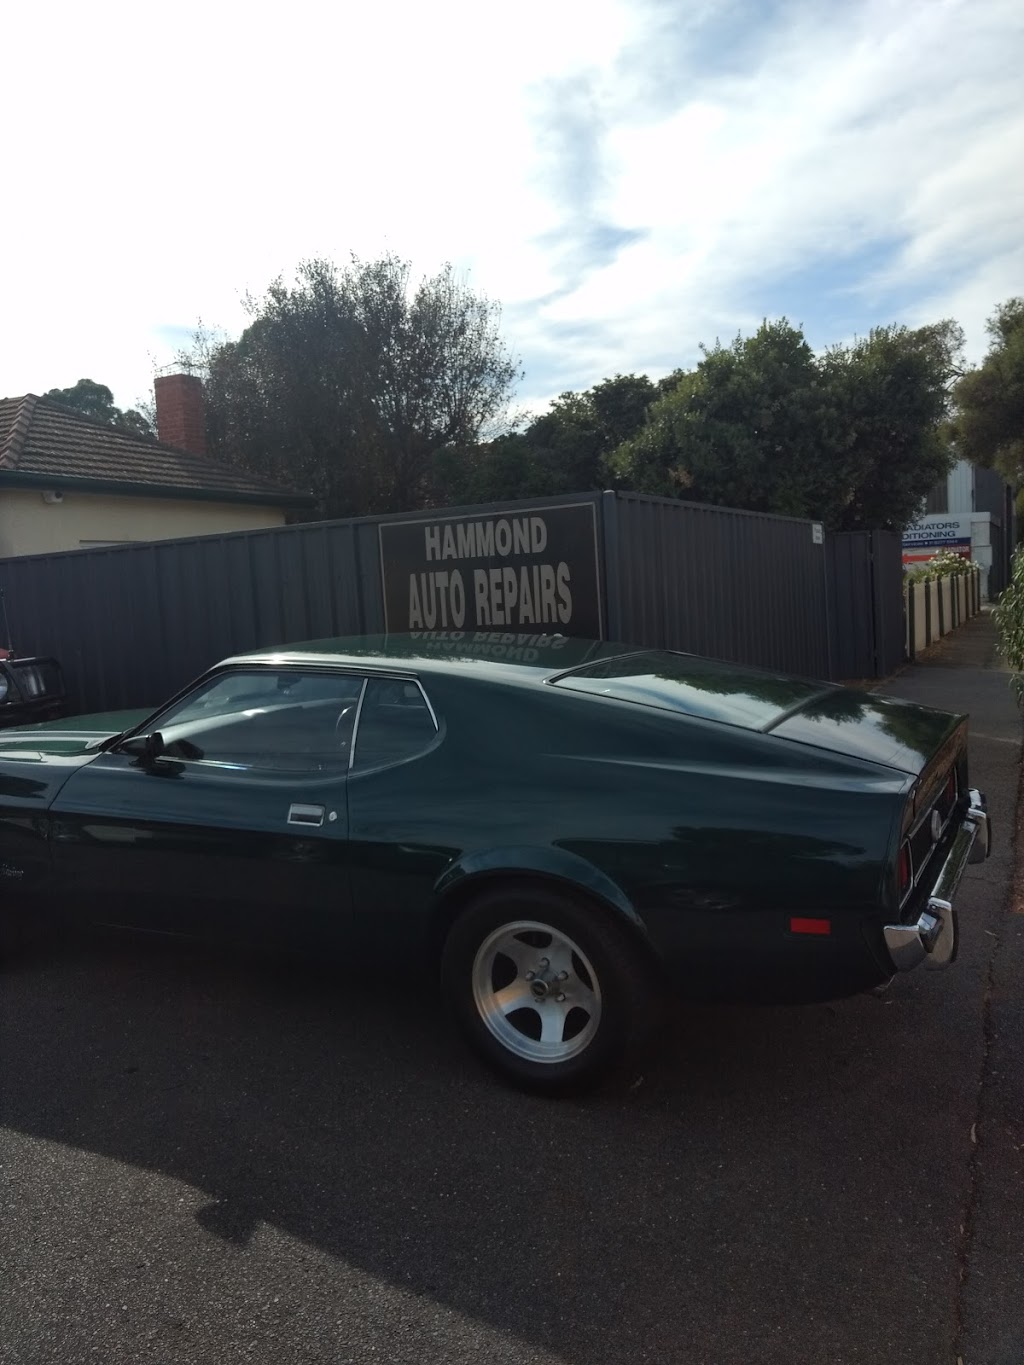 Hammond Auto Repairs | 11 Manfull St, Melrose Park SA 5039, Australia | Phone: (08) 8276 8616